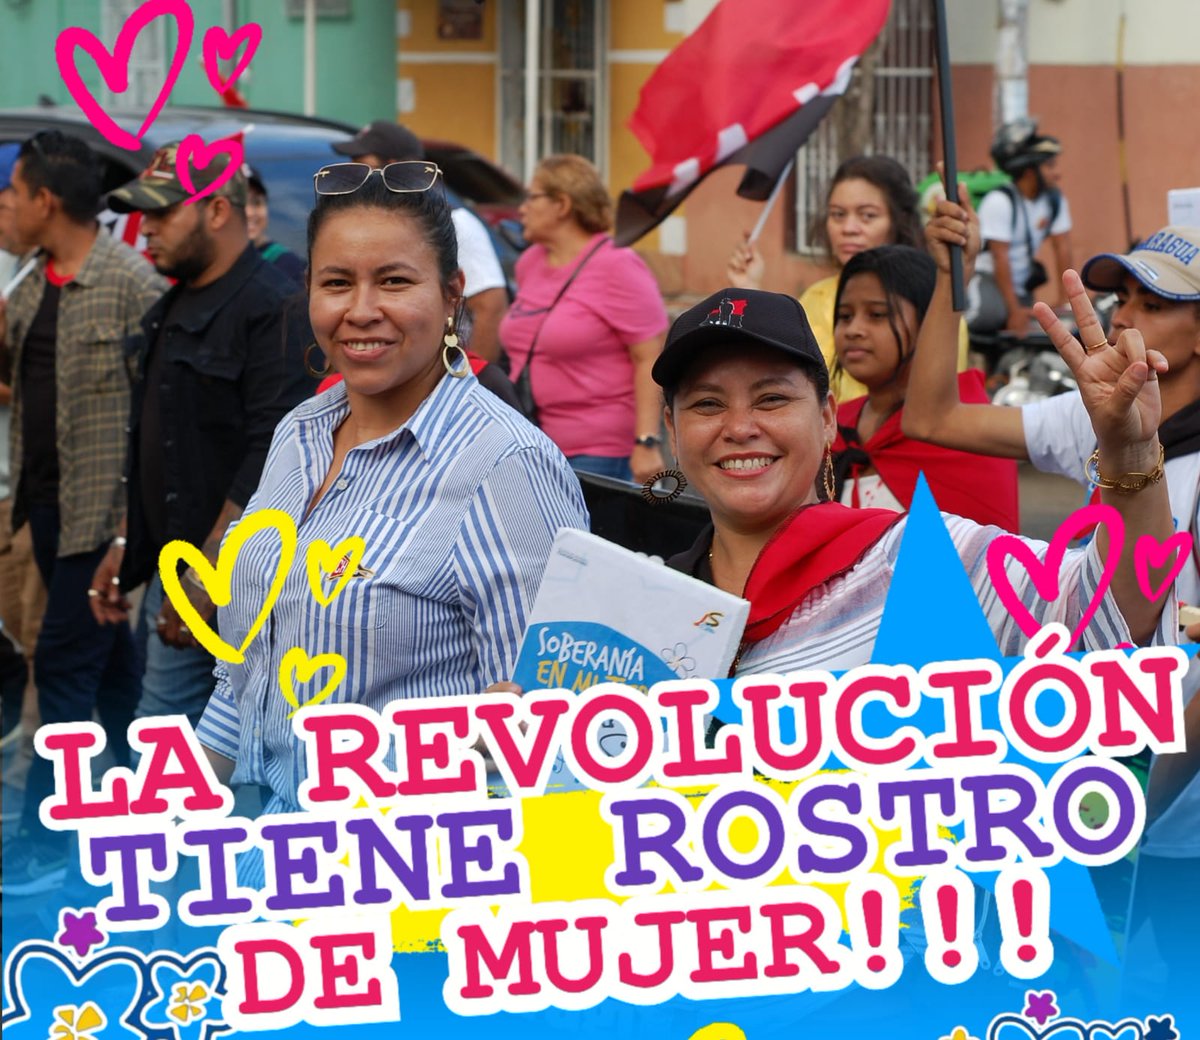 #Nicaragua Decir mujer, es decir Revolución!! #AdelanteMujeresHeroicas #TropaSandinista @KarlyDiazG25 @LuisaOr91 @Uva22